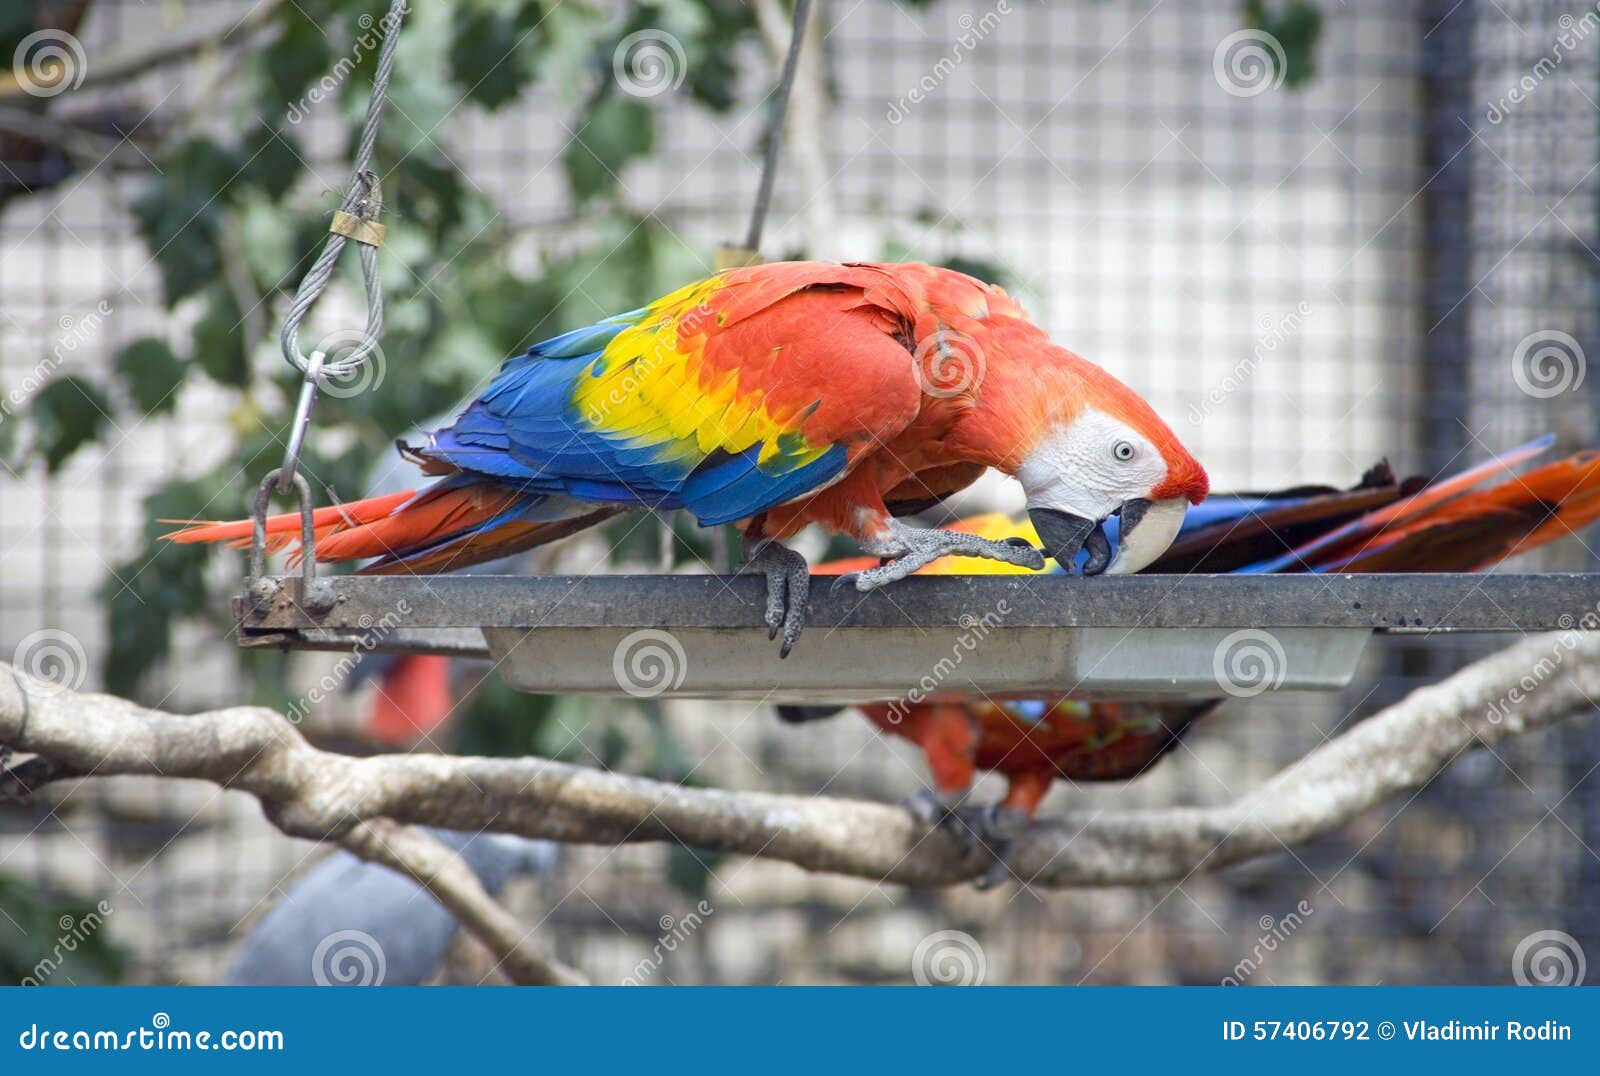 macaw parrot bird vertebrate beak claws